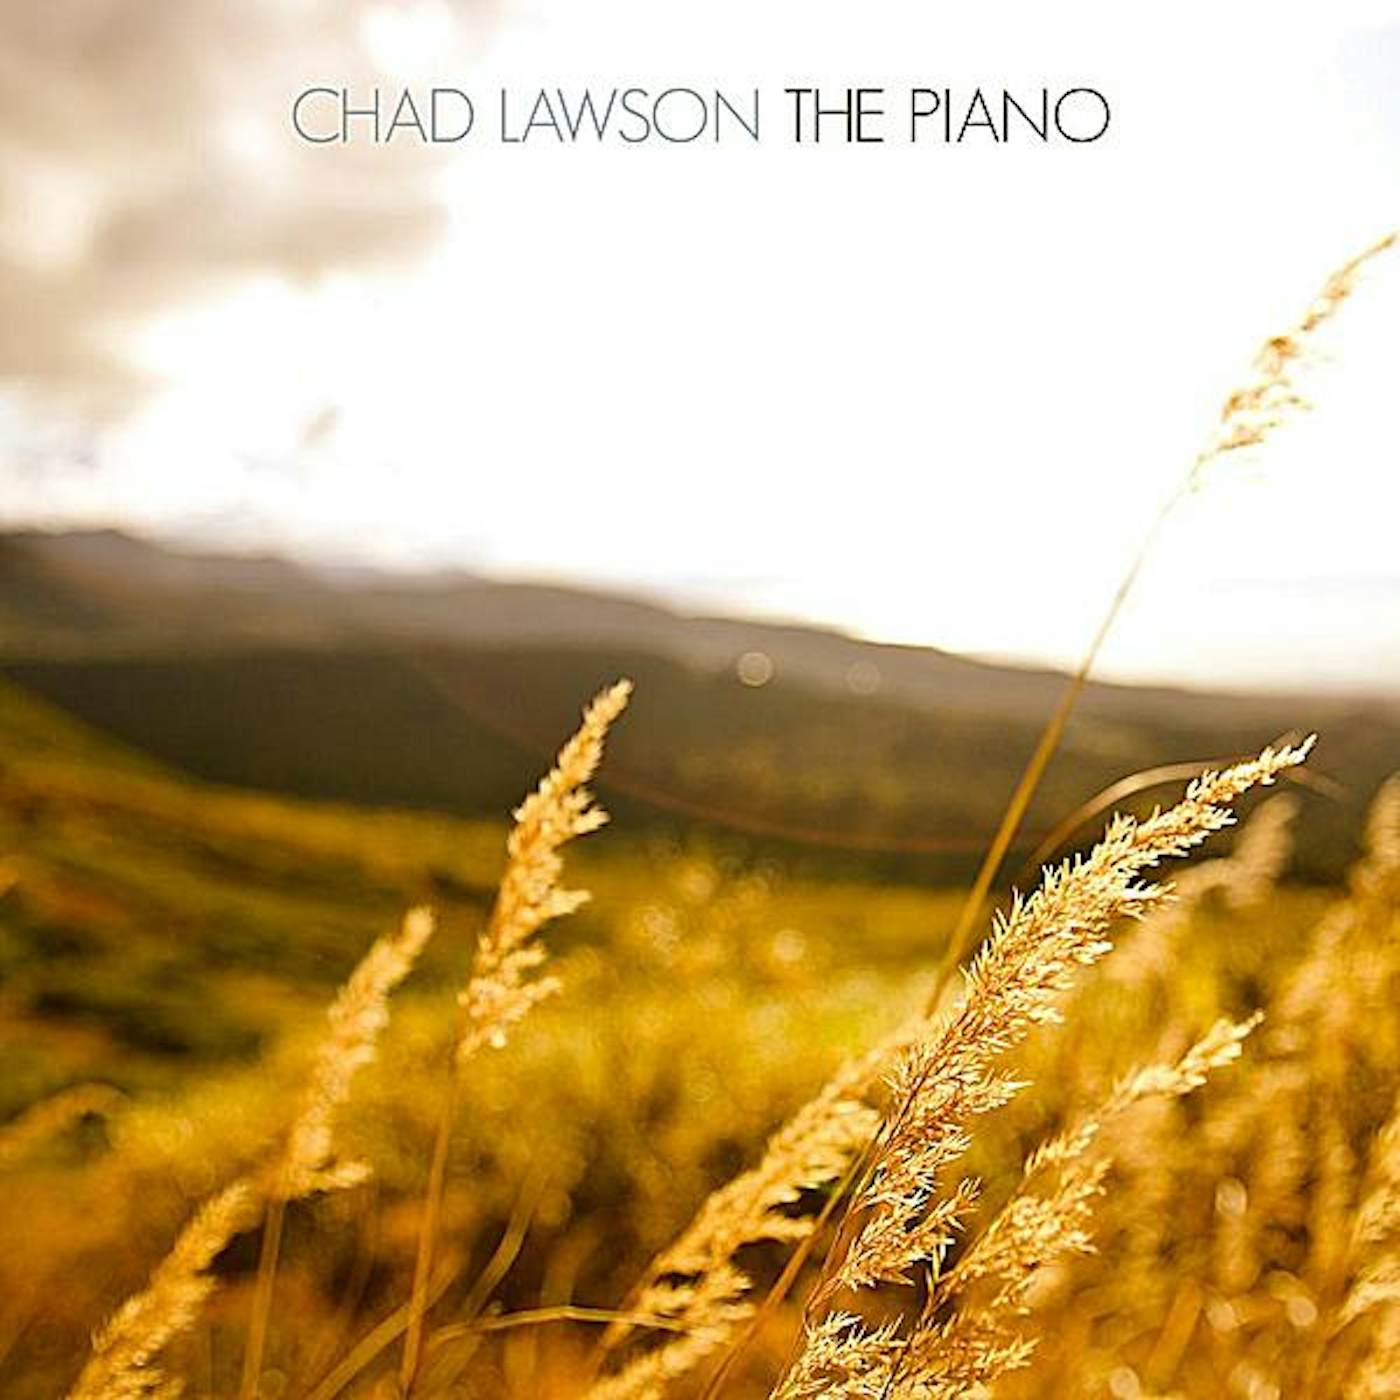 Chad Lawson PIANO CD